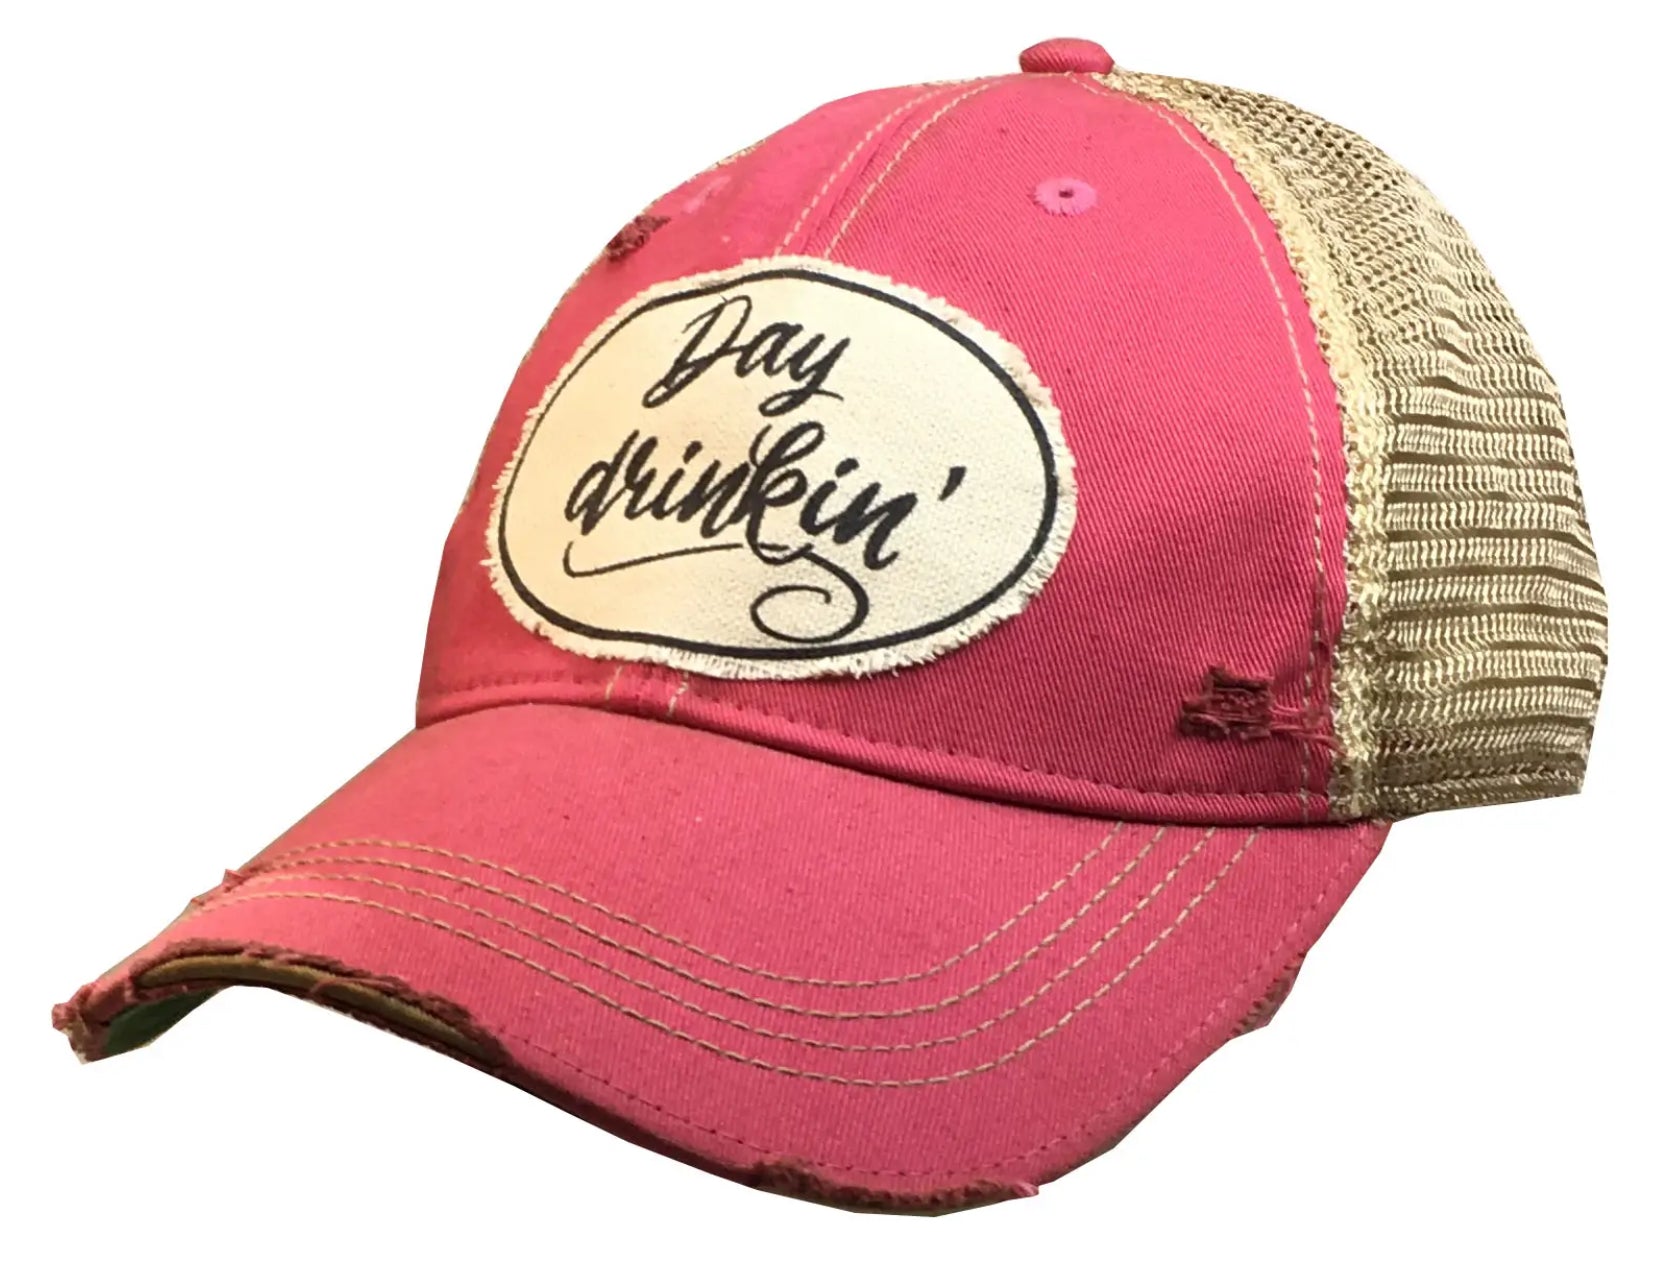 Day Drinkin' Distressed Trucker Hat Baseball Cap